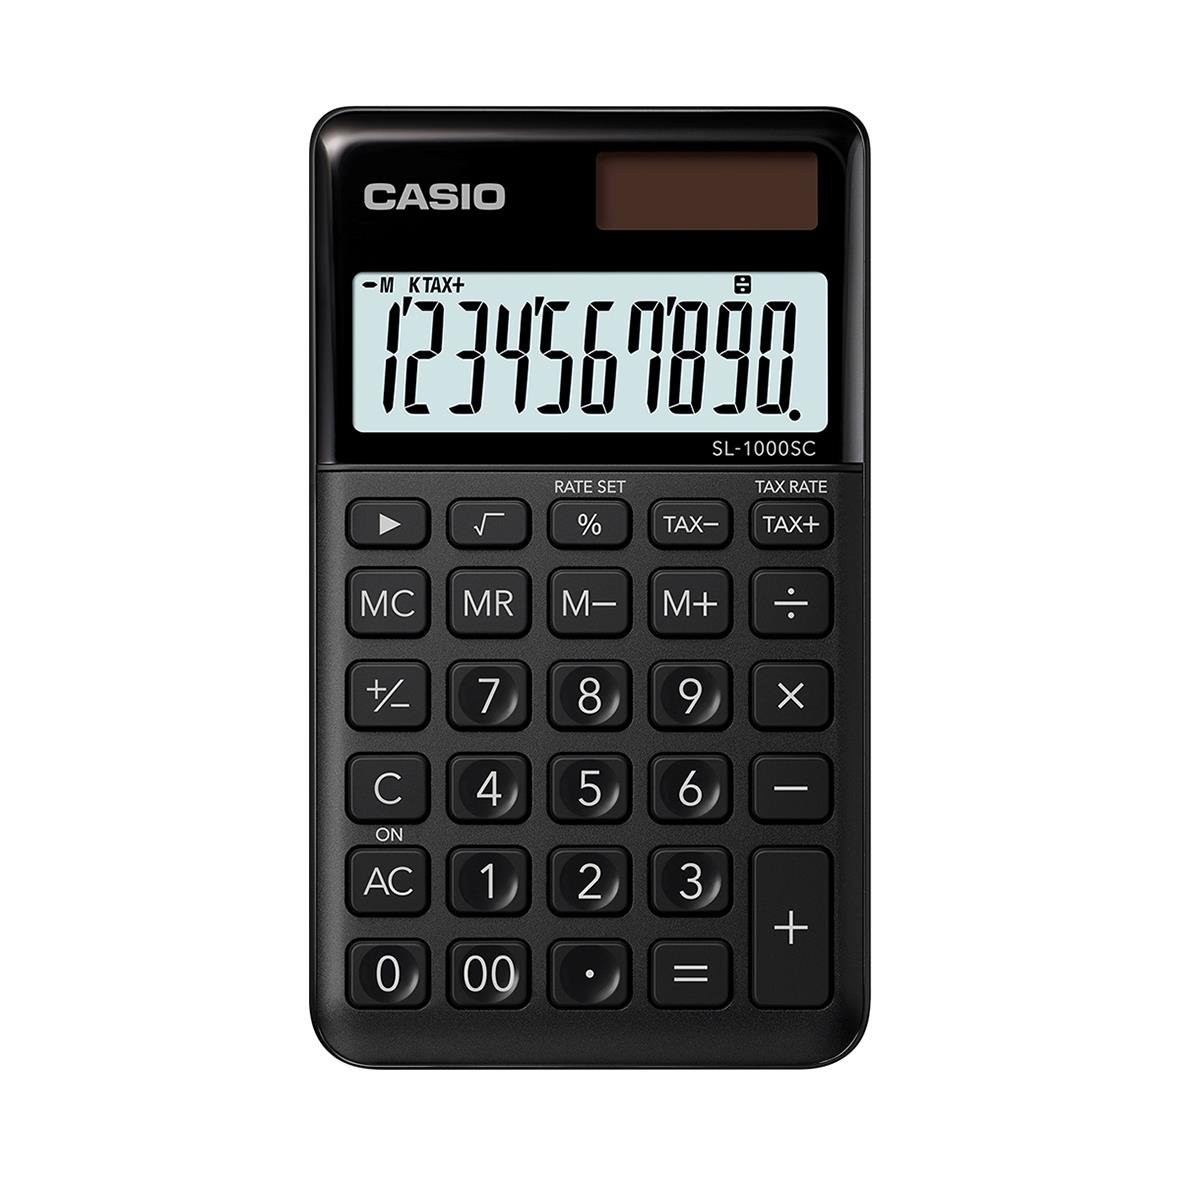 Miniräknare Casio SL-1000SC